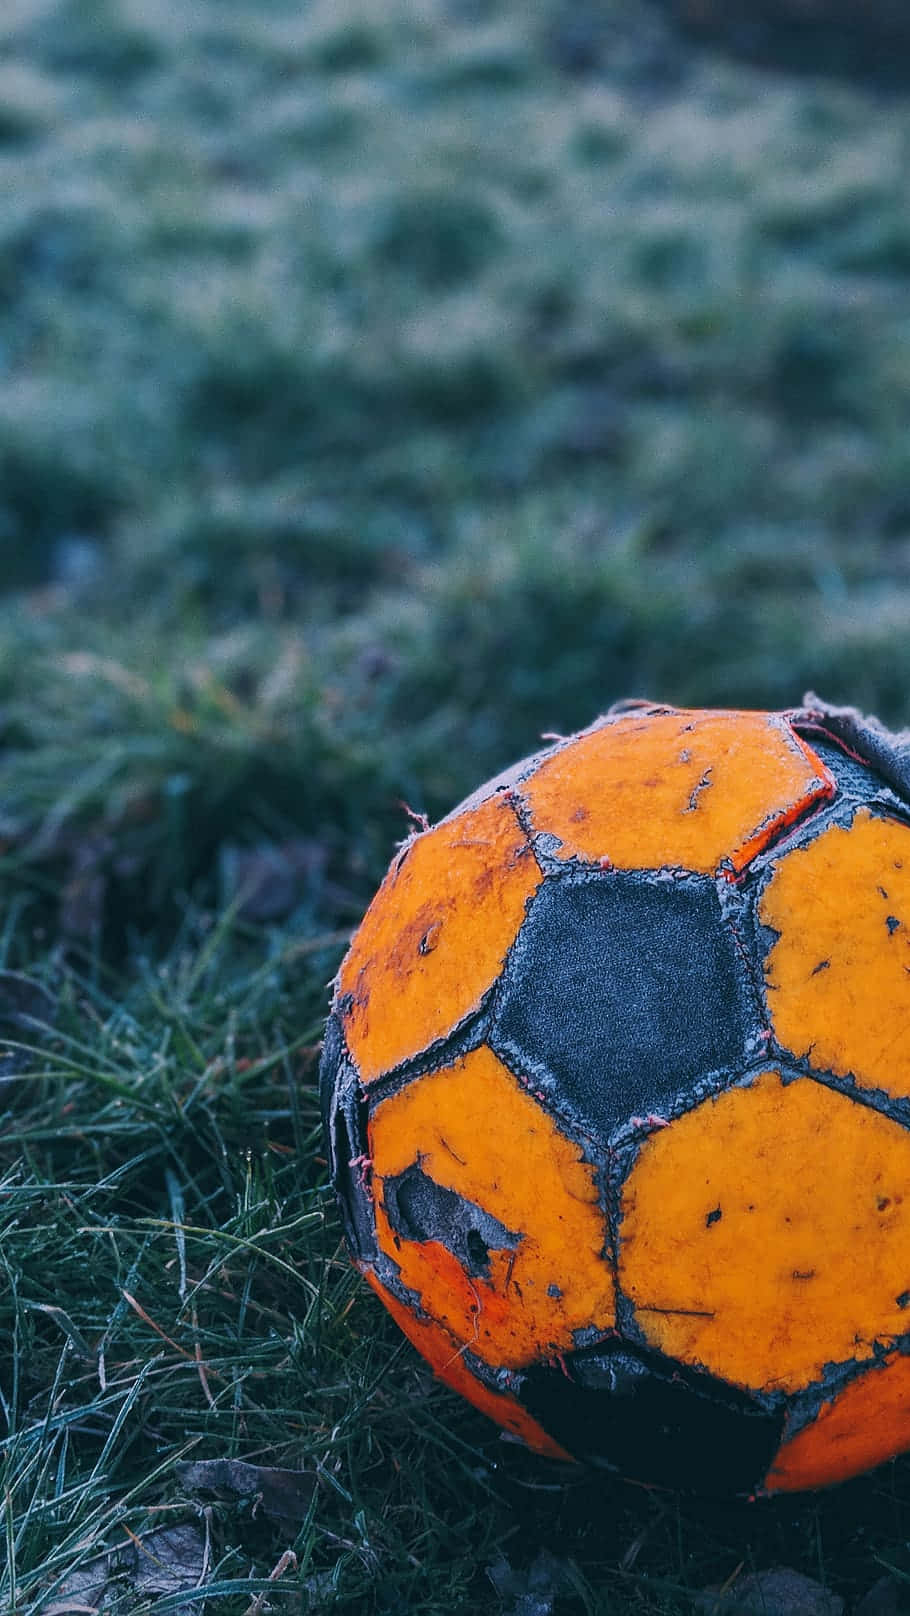 An Orange Soccer Ball Sitting On The Grass